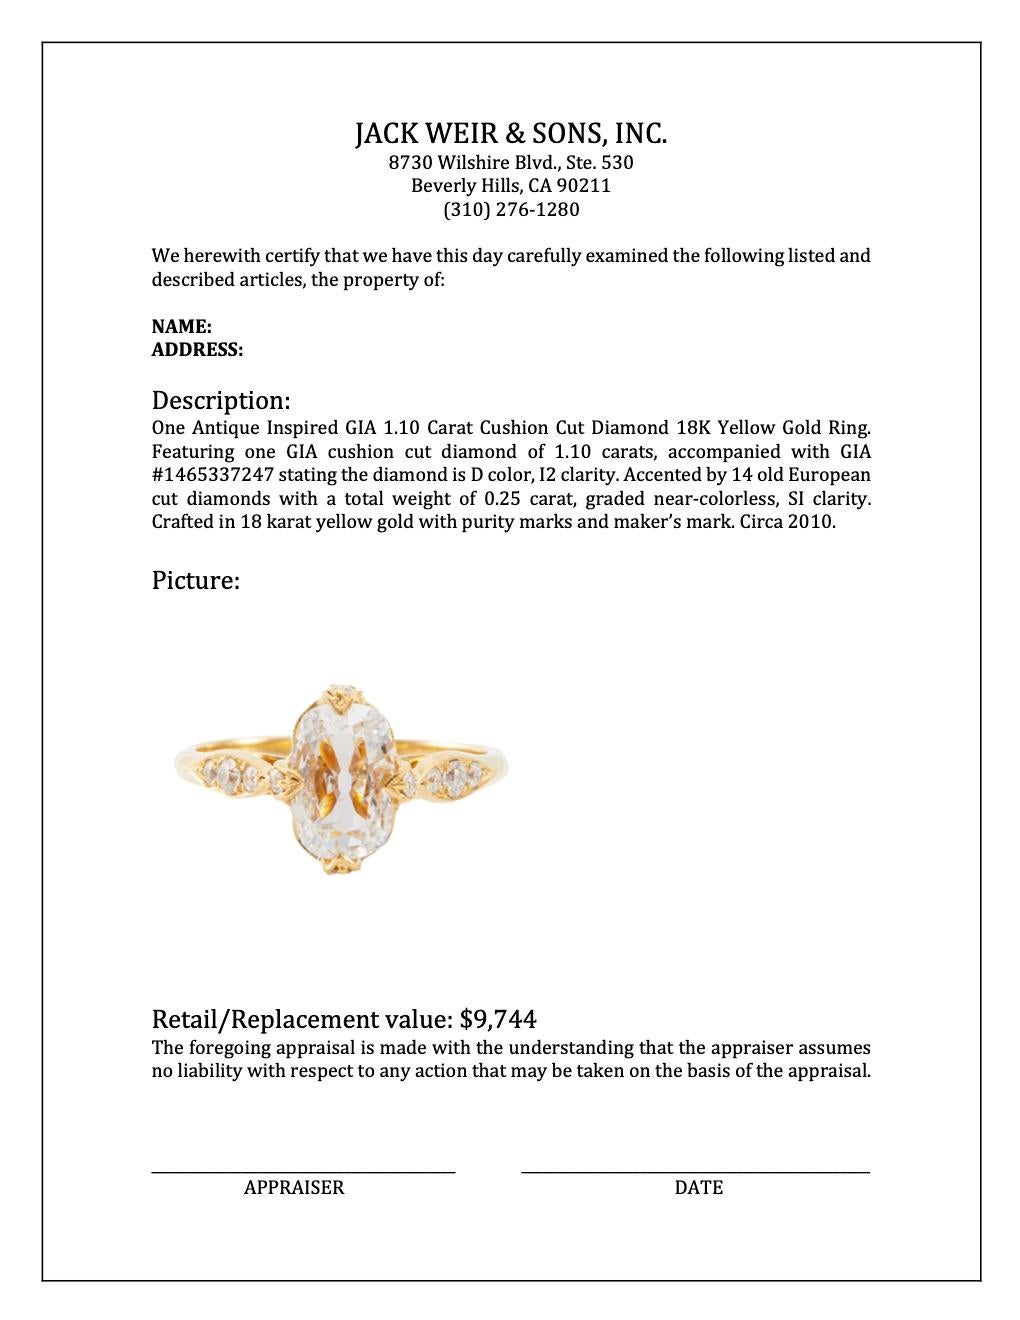 Antique Inspired GIA 1.10 Carat Cushion Cut Diamond 18K Yellow Gold Ring 3